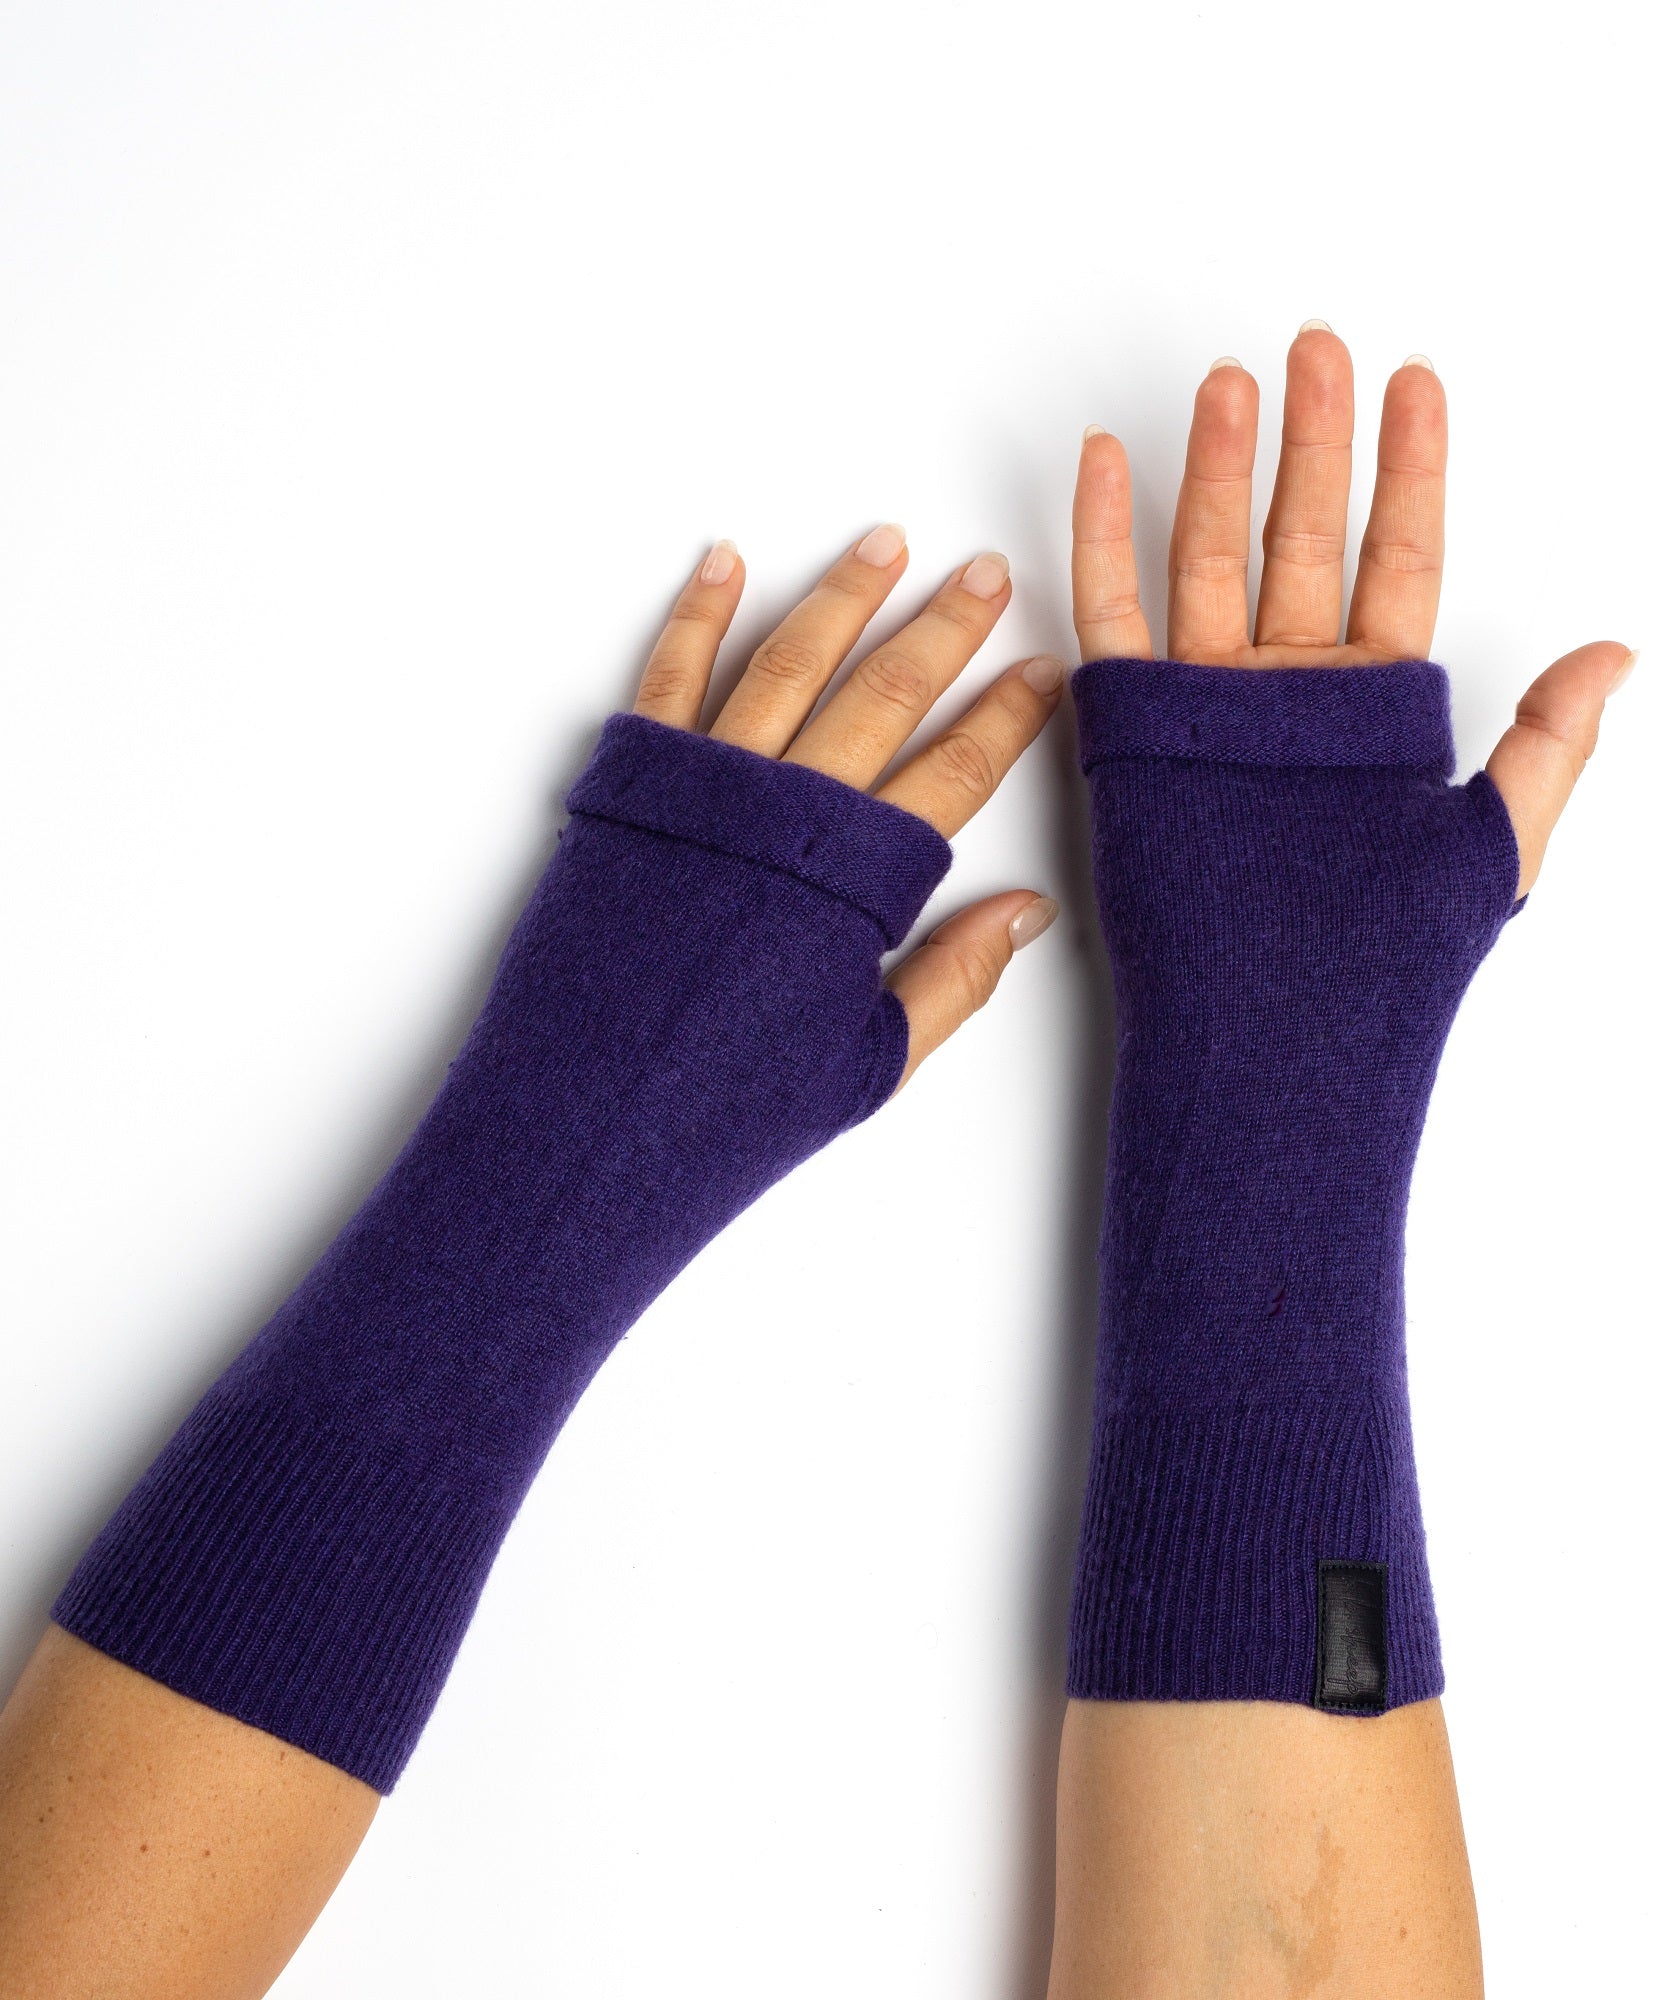 Jewel Fingerless Gloves Set - Purple, Blue and Matcha Green, Box of 3